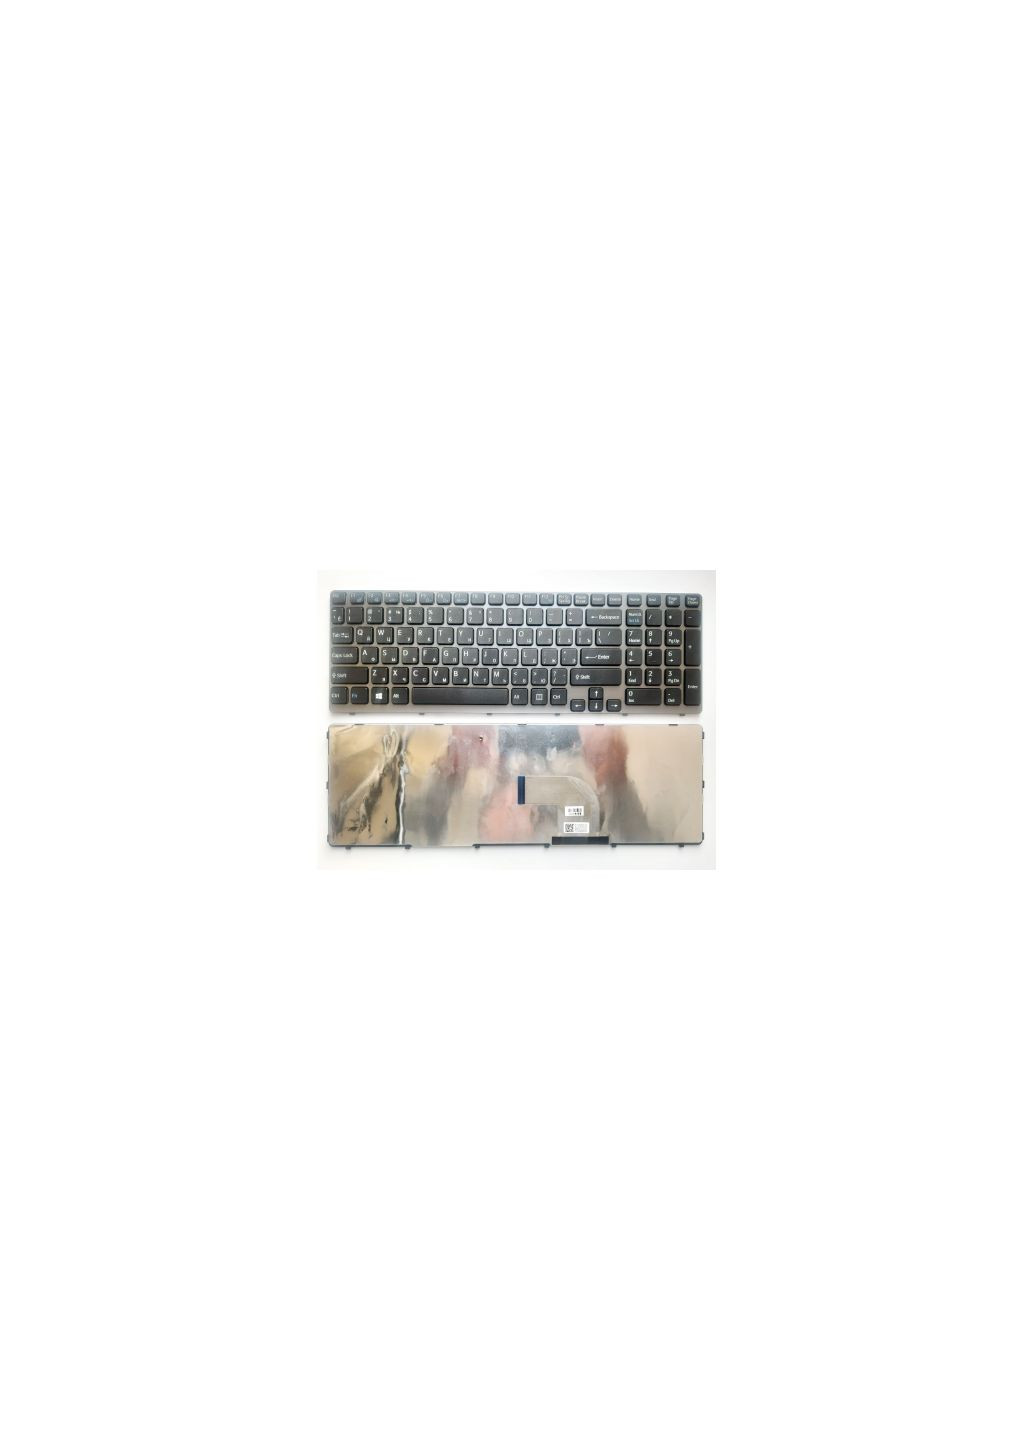 Клавиатура ноутбука (A43539) Sony sve15 (e15 series) черная с серой рамкой ua (276706402)